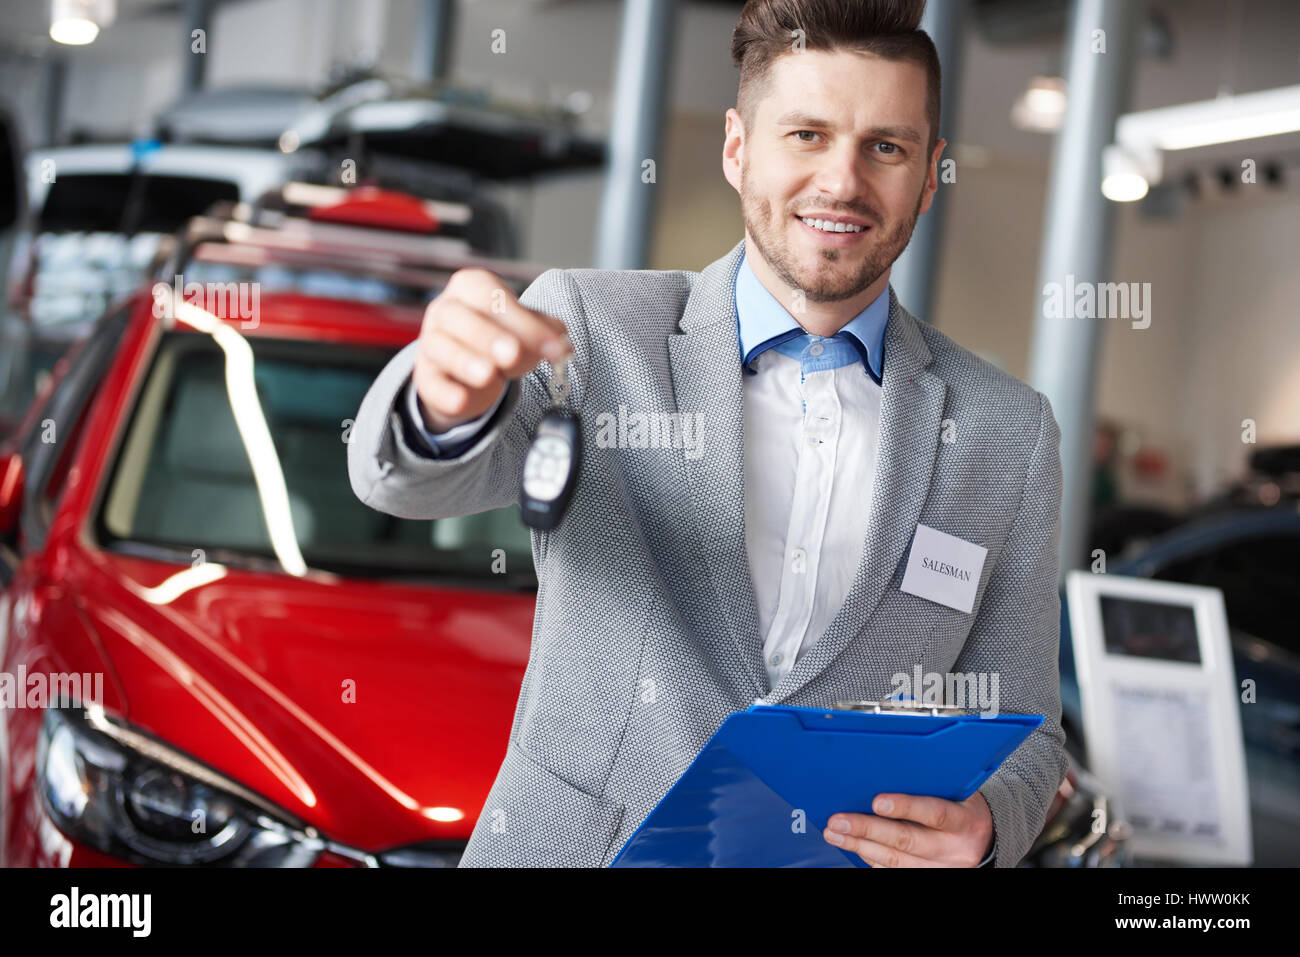 Smiling salesman handing car keys Stock Photo